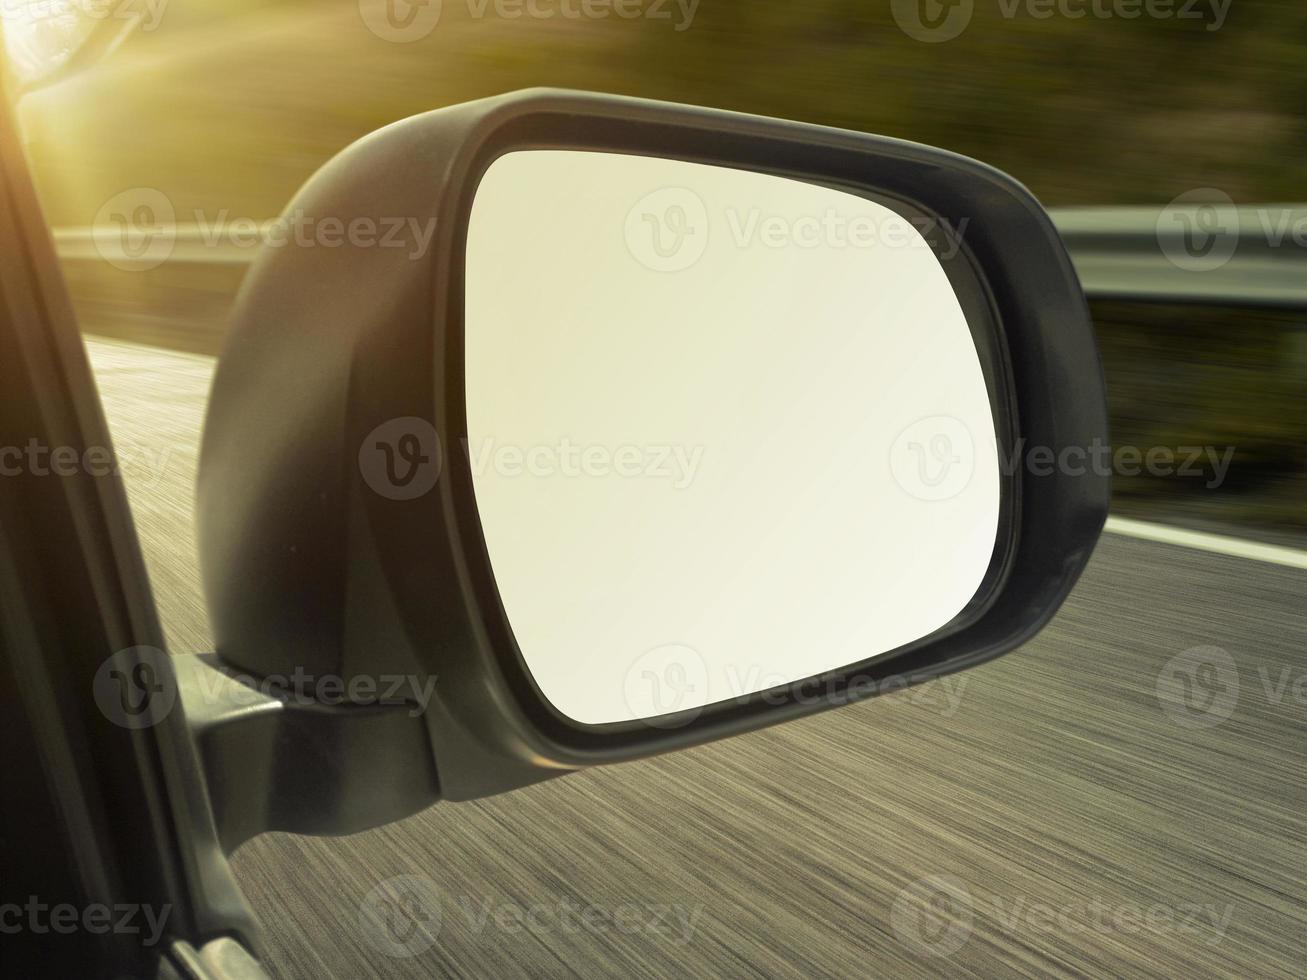 Auto Seitenspiegel. Maschinenteile 16520621 Stock-Photo bei Vecteezy